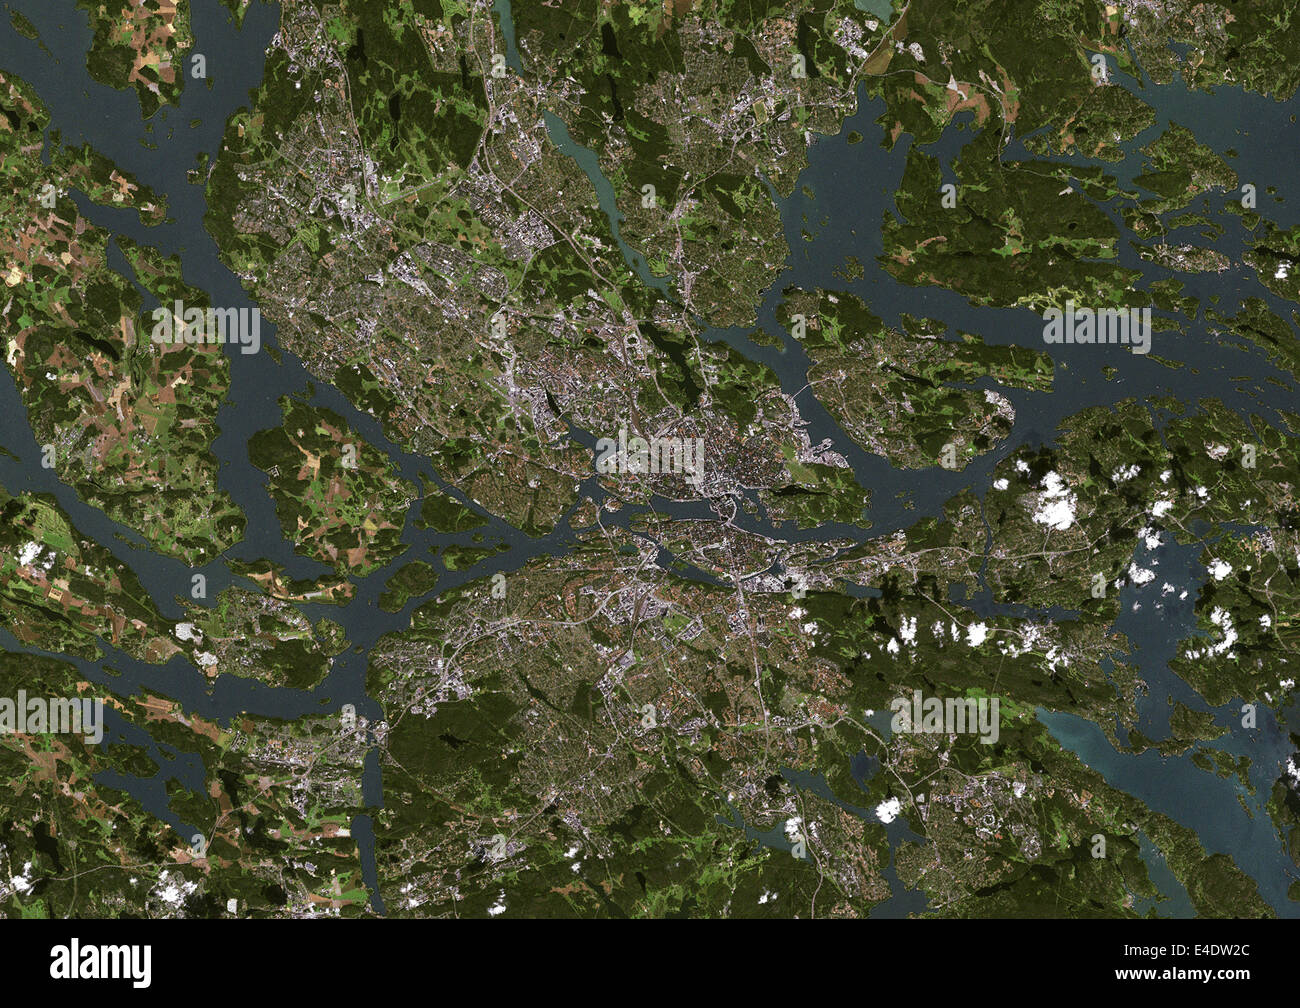 Stockholm, Sweden, True Colour Satellite Image. Stockholm, Sweden. True colour satellite image of Stockholm, capital city of Swe Stock Photo